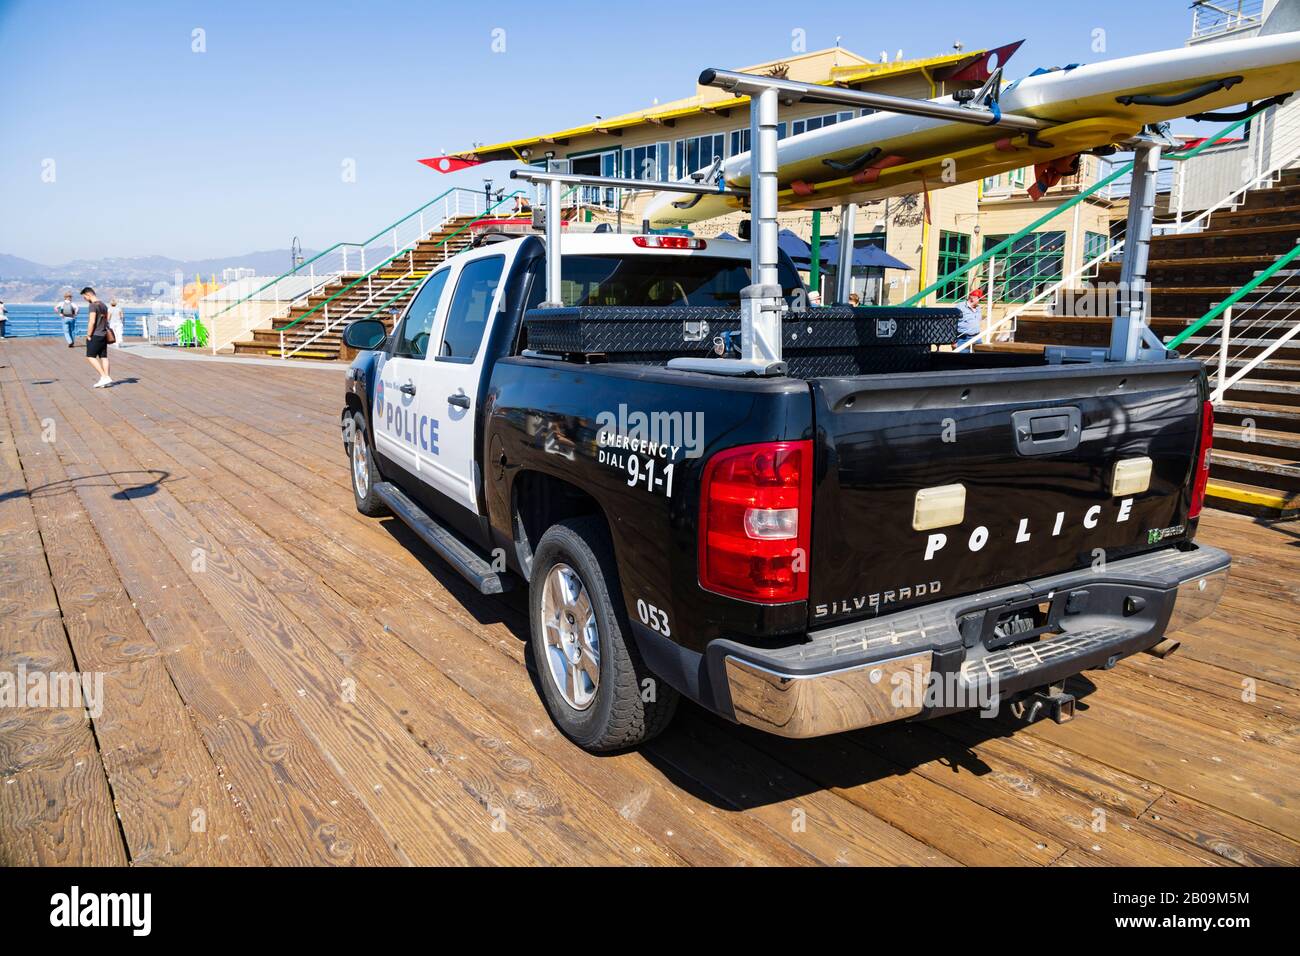 Chevrolet Silverado Hybrid police patrol pickup with surfboard, on the end of Santa Monica pier. California, United States of America Stock Photo